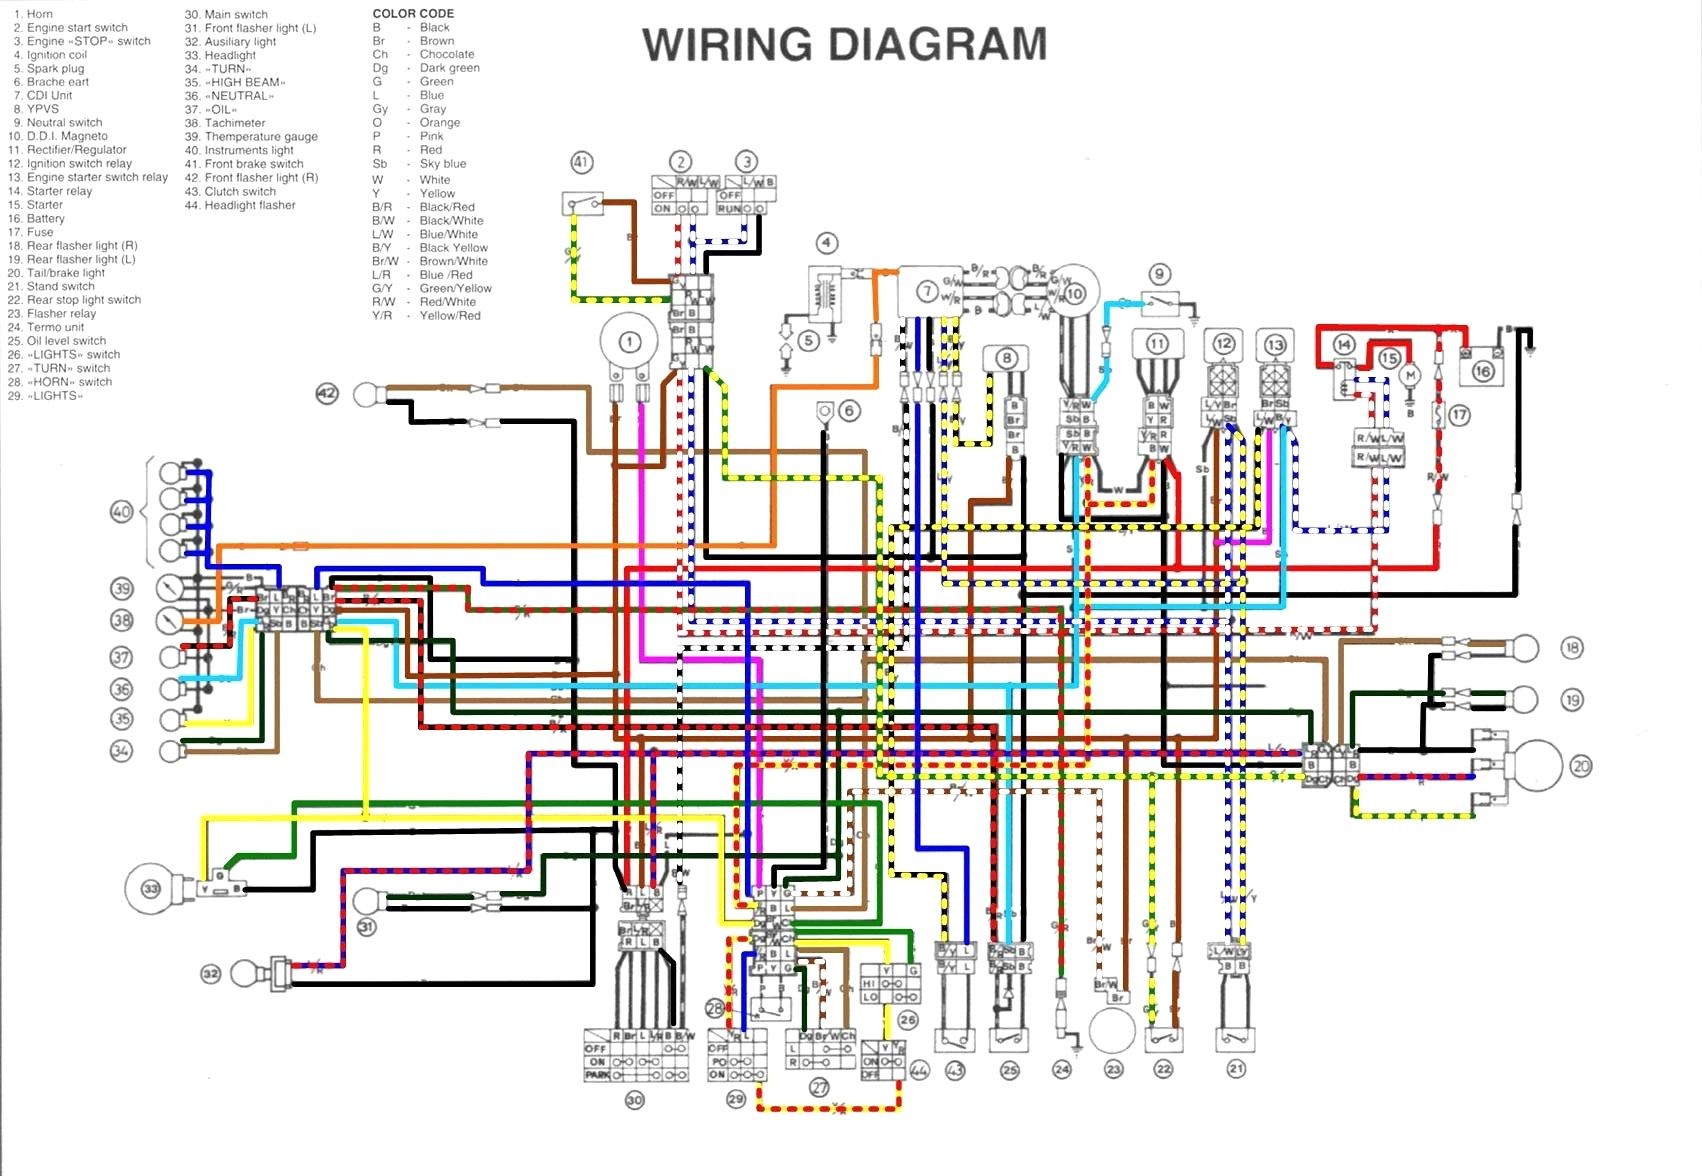 [DIAGRAM] Honda 450r Wiring Diagram FULL Version HD Quality Wiring